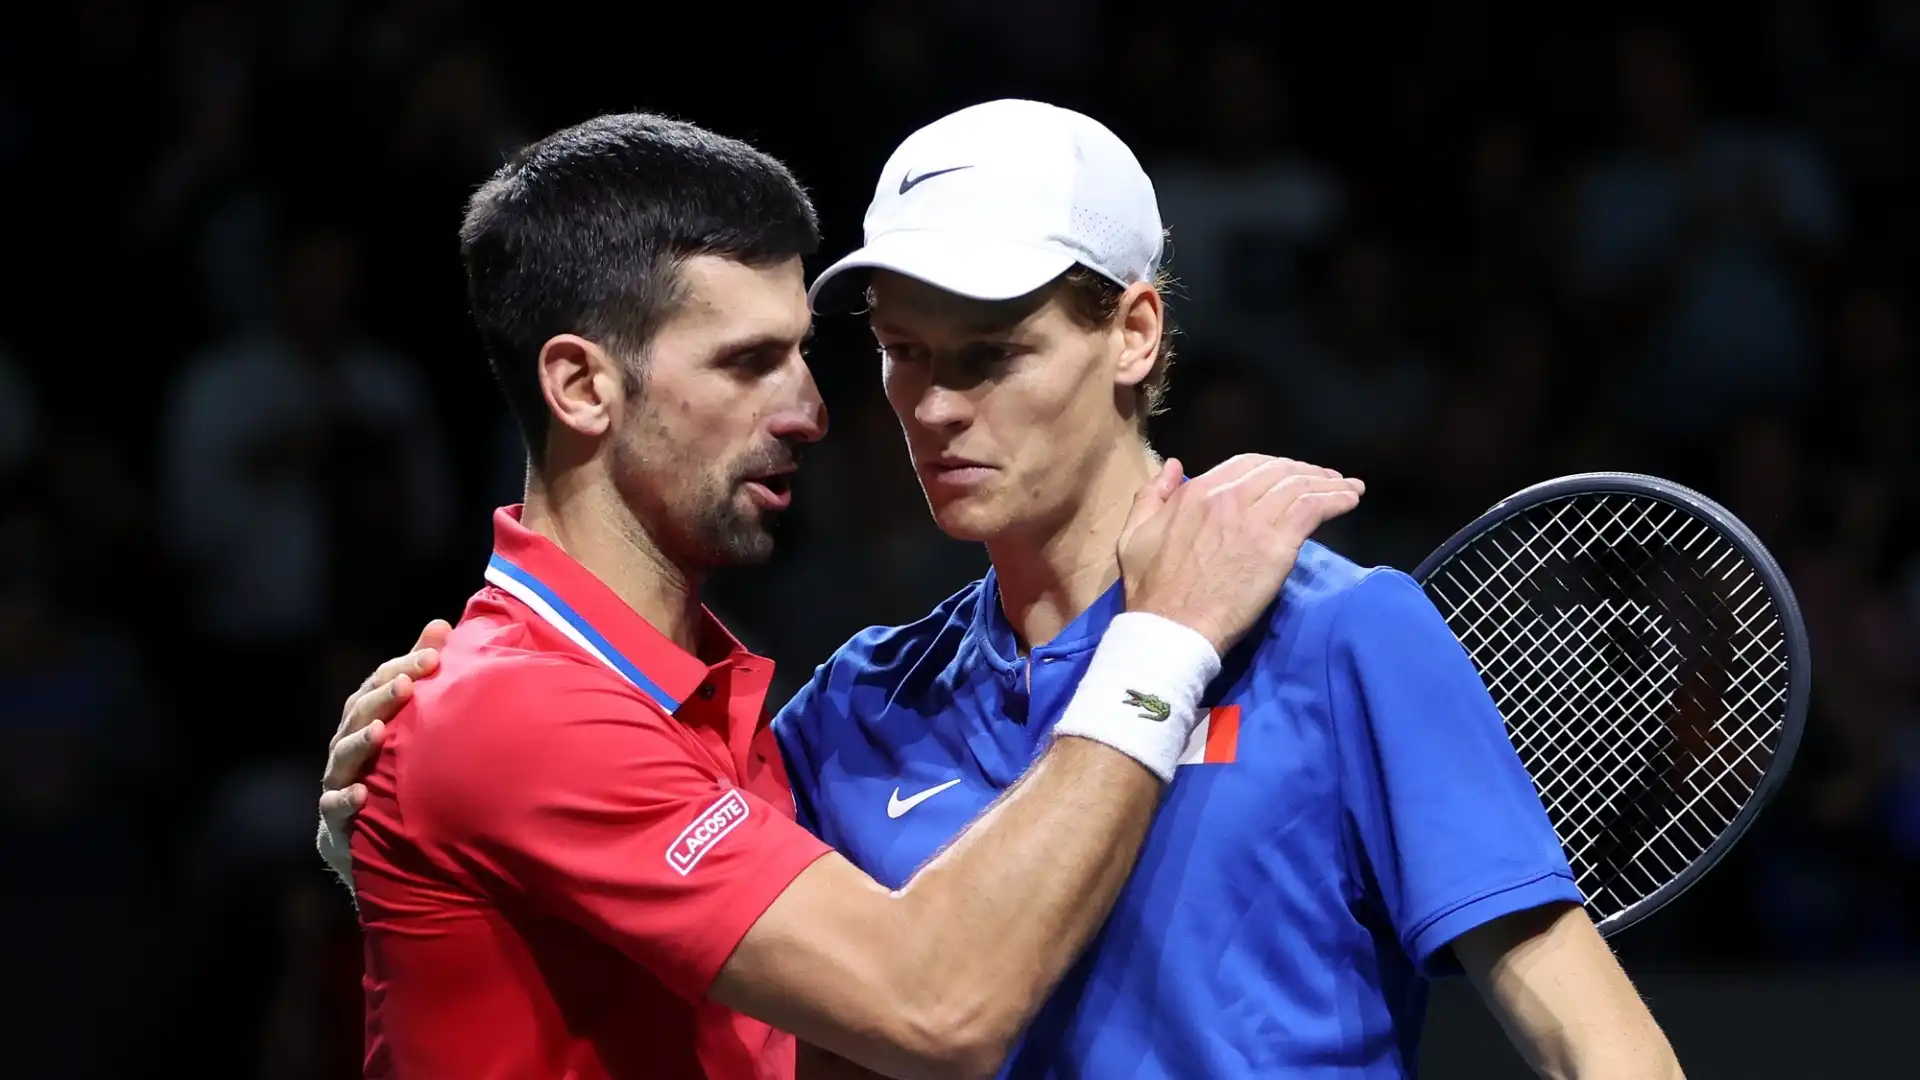 Allenò Serena Williams: “Jannik Sinner mi ricorda il giovane Novak Djokovic”